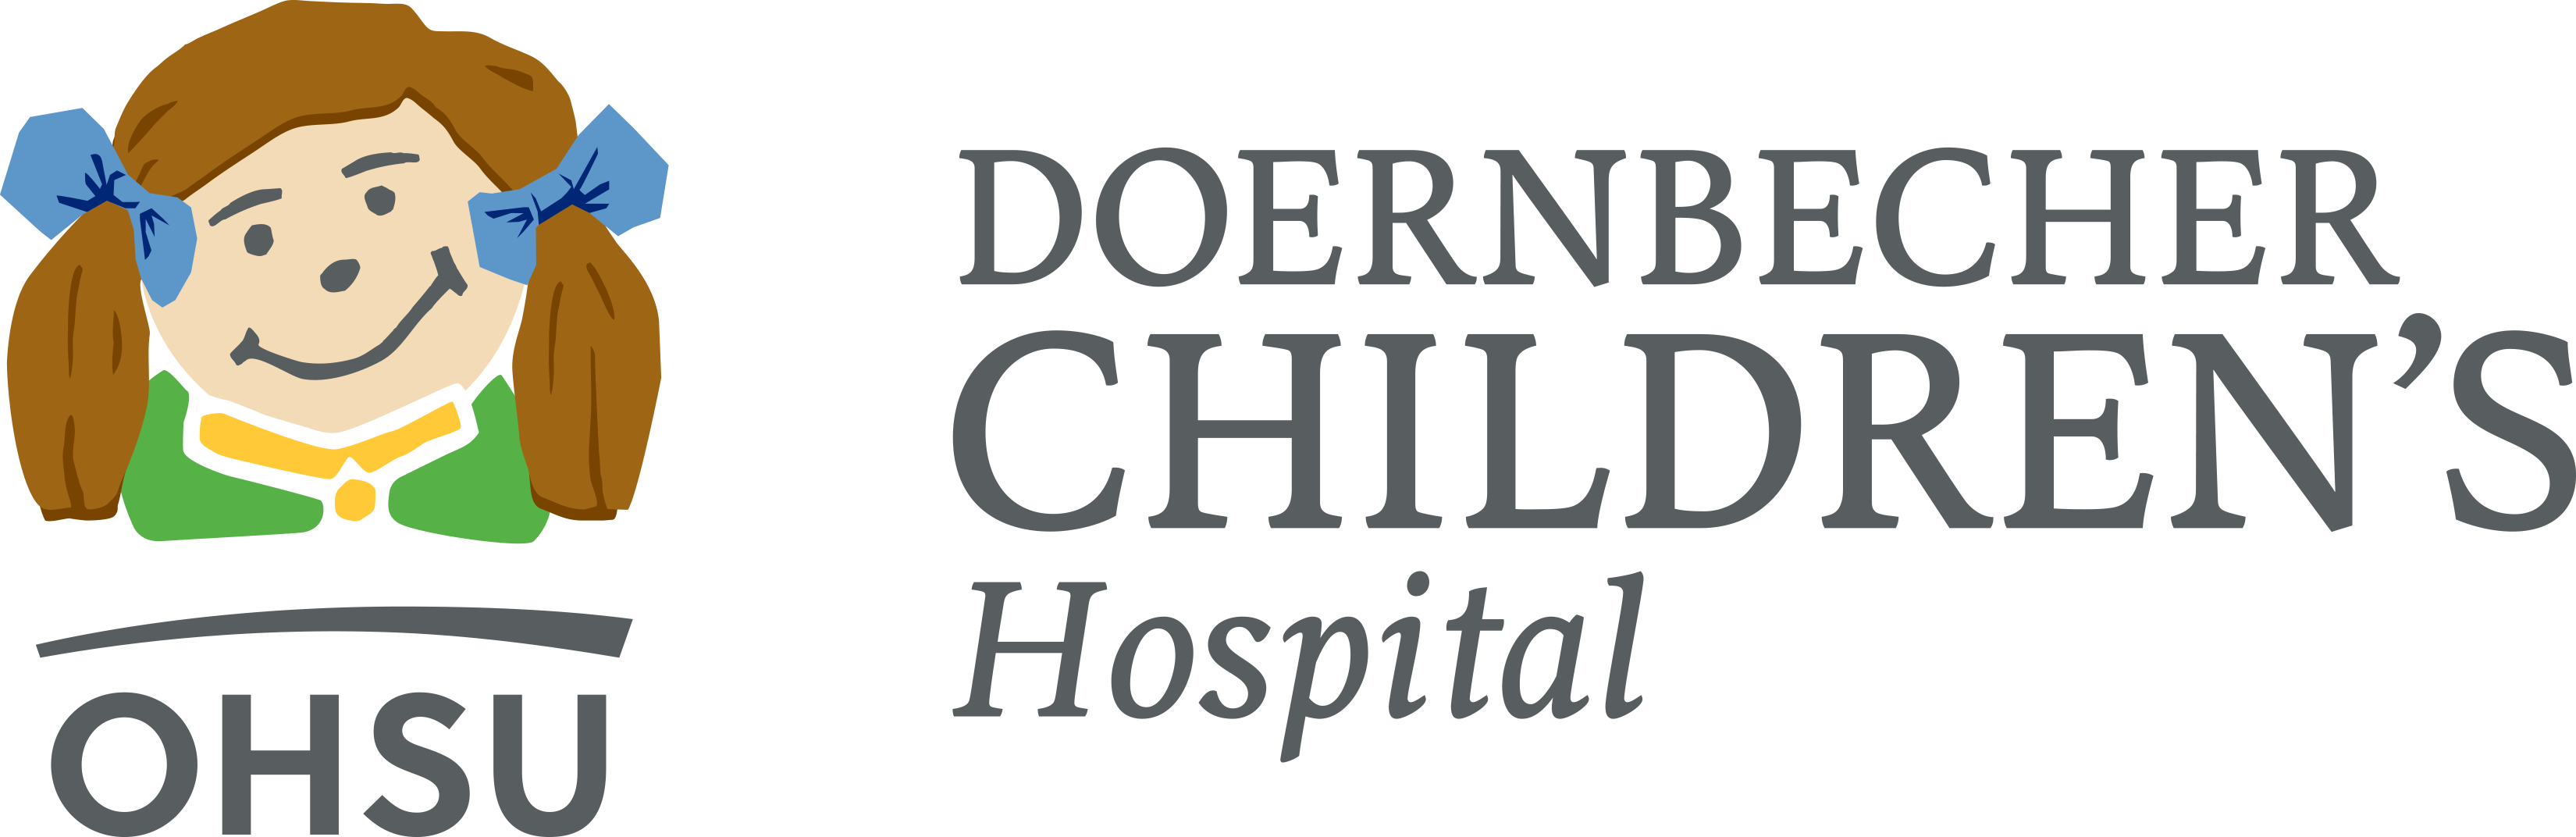 Doernbecher Children's Hospital logo